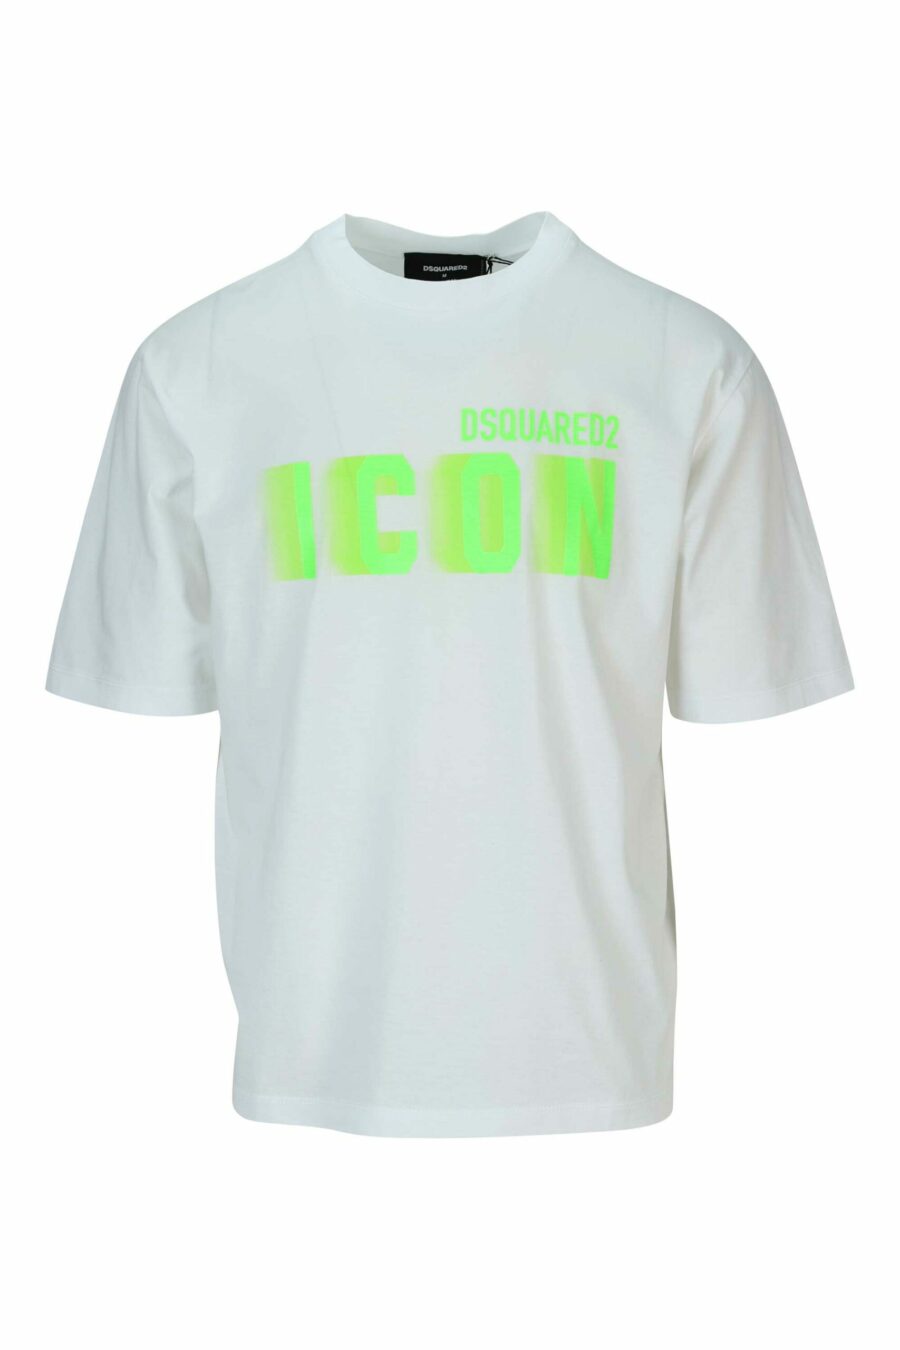 Camiseta blanca "oversize" con maxilogo "icon" verde neon borroso - 8054148359454 scaled